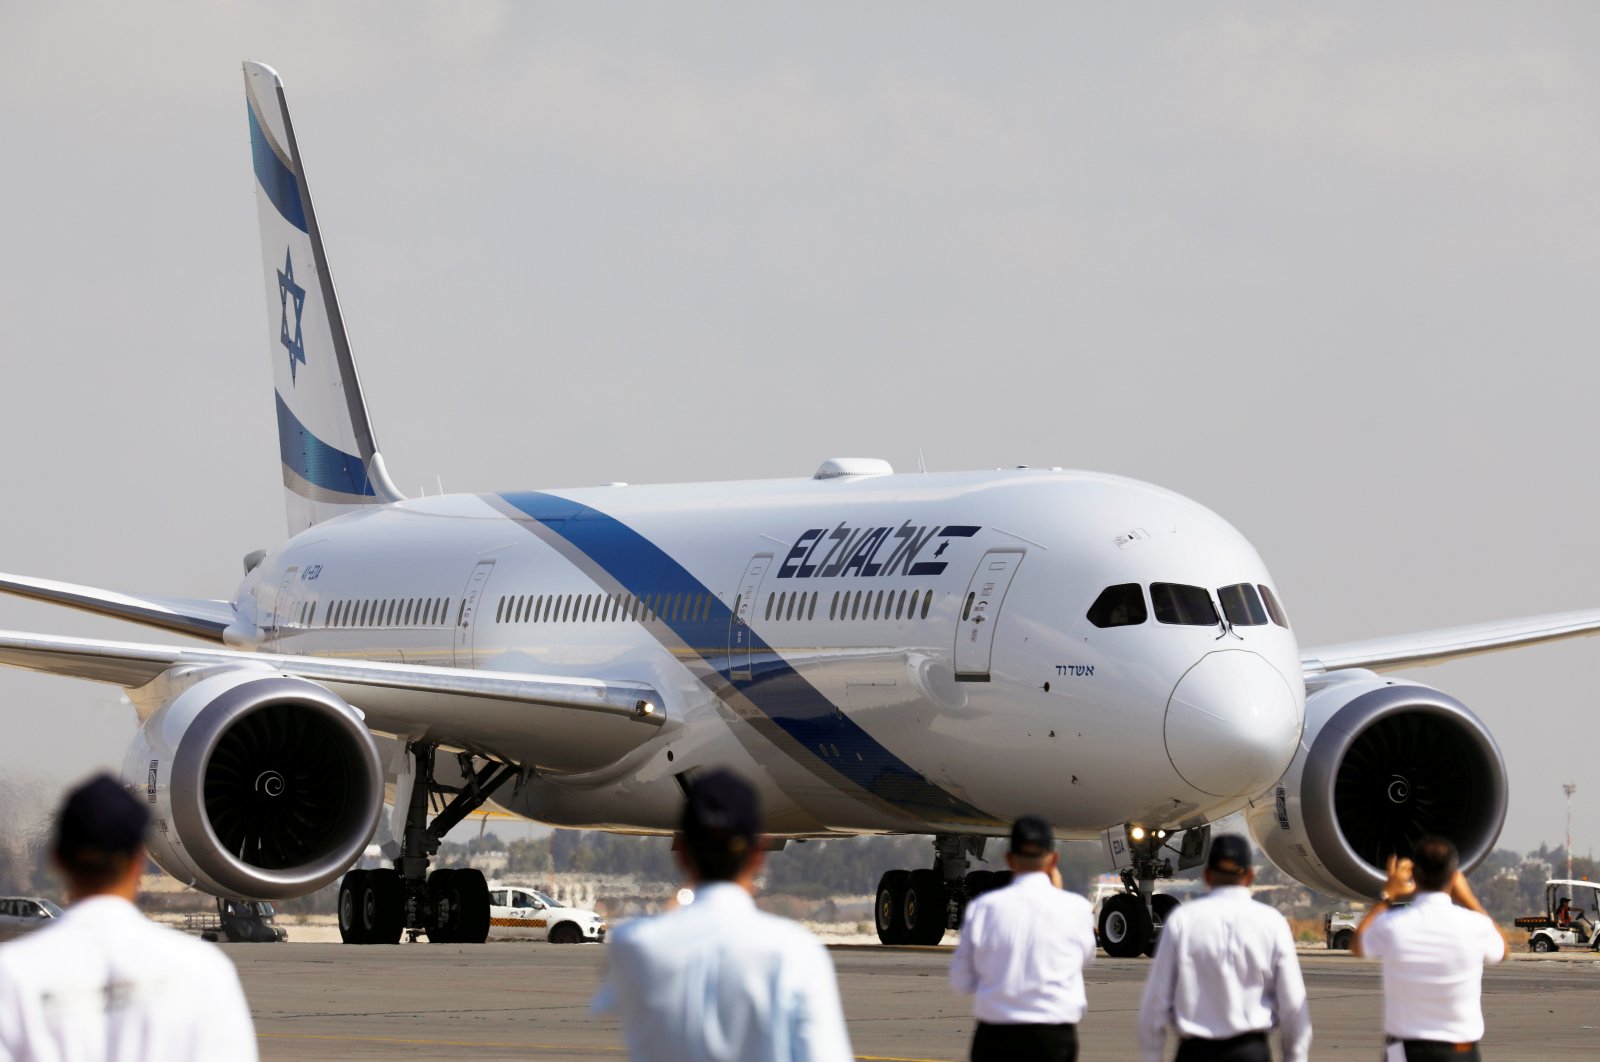 The first of Israel's El Al Airlines order of 16 Boeing 787 Dreamliner jets, lands at Ben Gurion International Airport, near Tel Aviv, Israel Aug. 23, 2017. (Reuters File Photo)